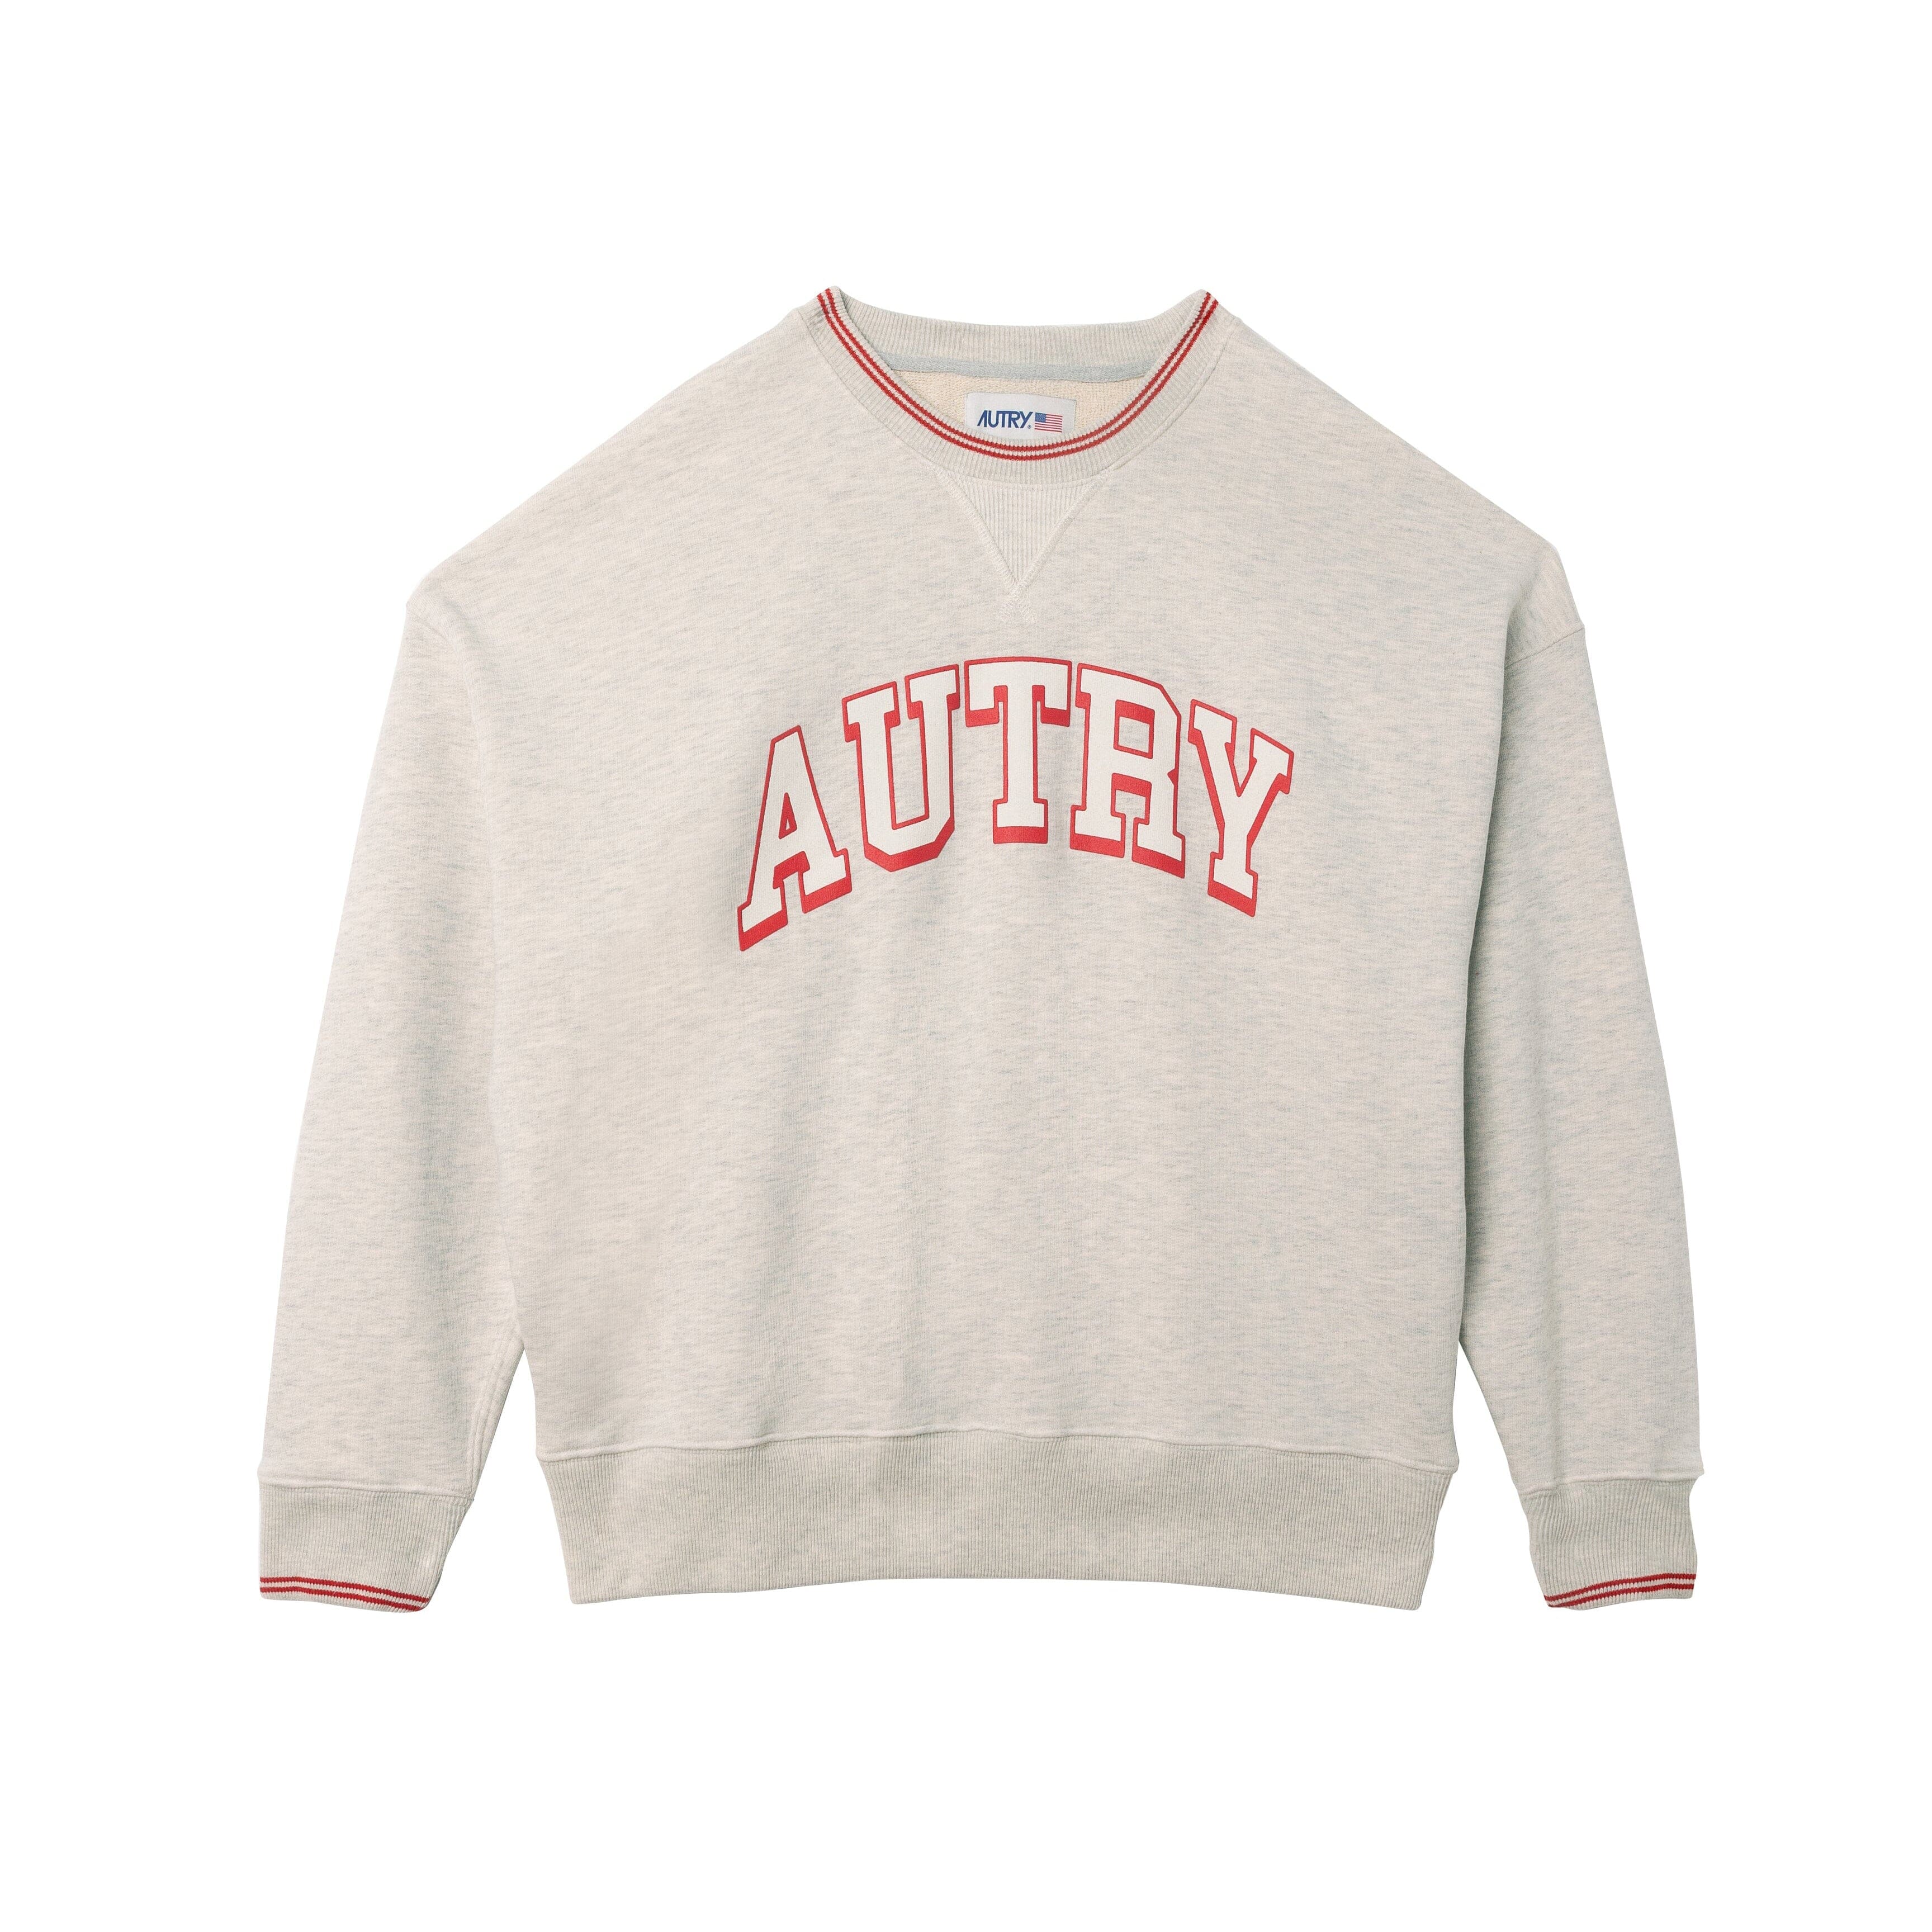 AUTRY - SWPW 524M - Autry Sweatshirt - Grigio Melange/ Rosso AUTRY - Collezione donna 